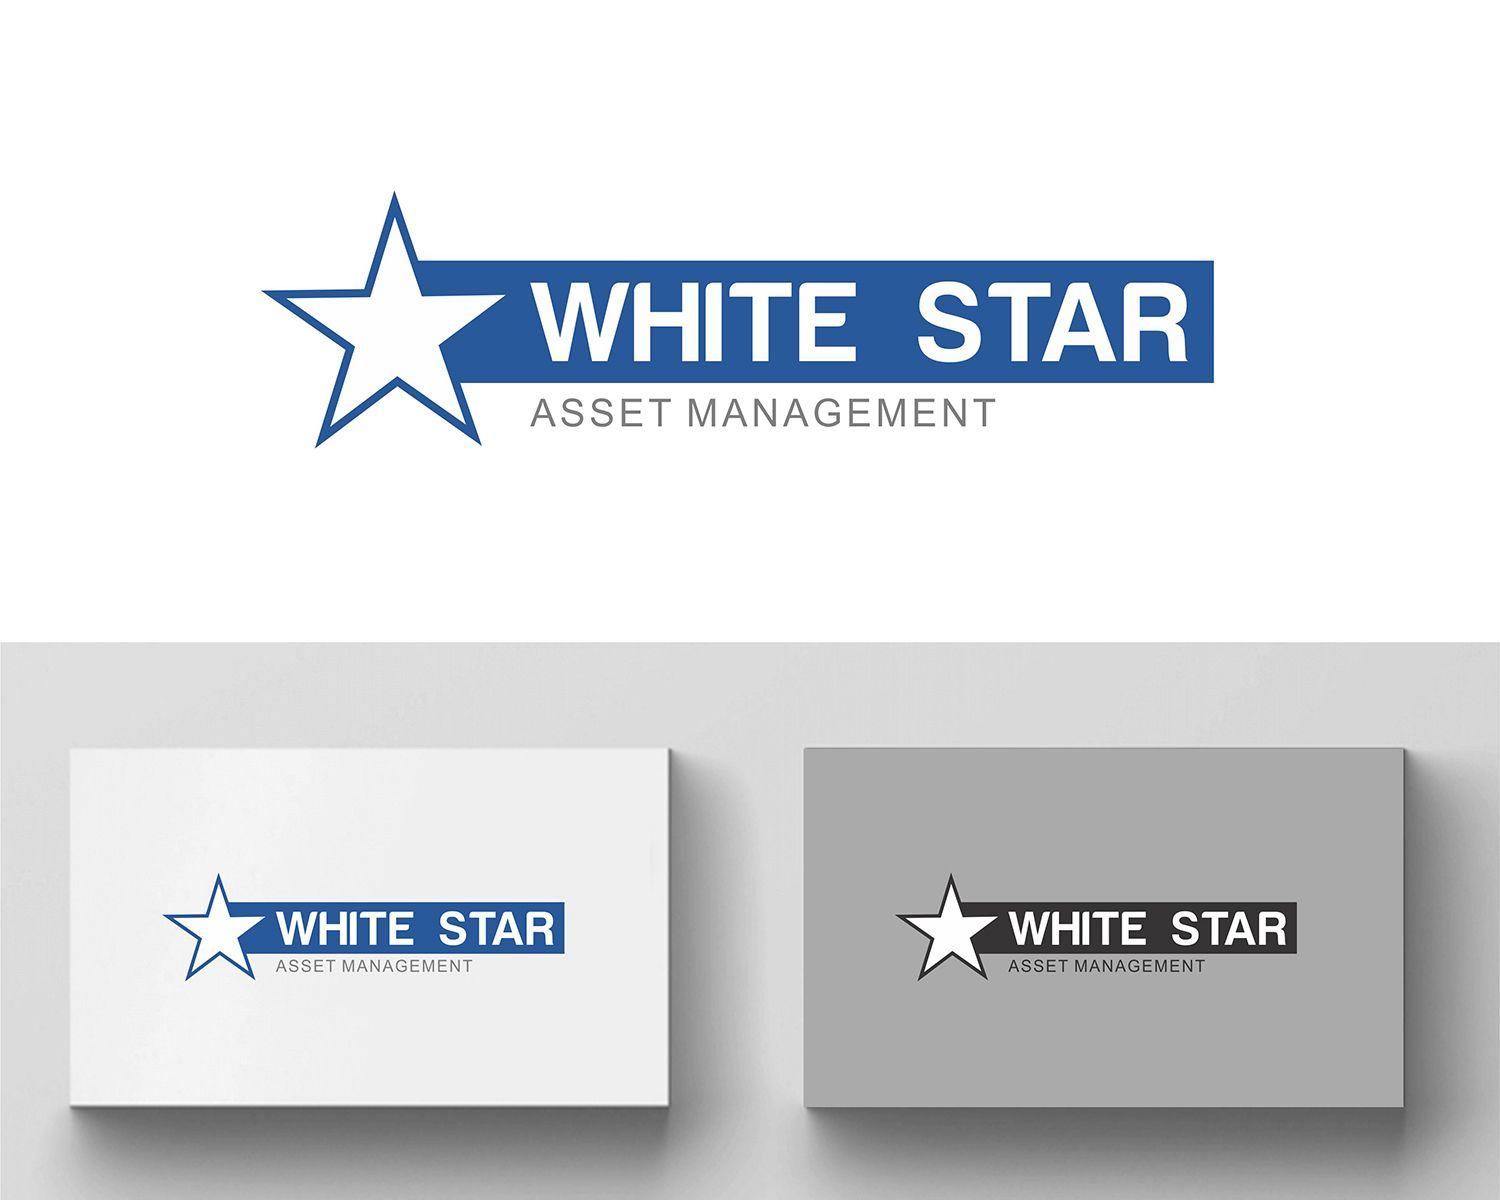 White Star Company Logo - Serious, Conservative, Asset Management Logo Design for 